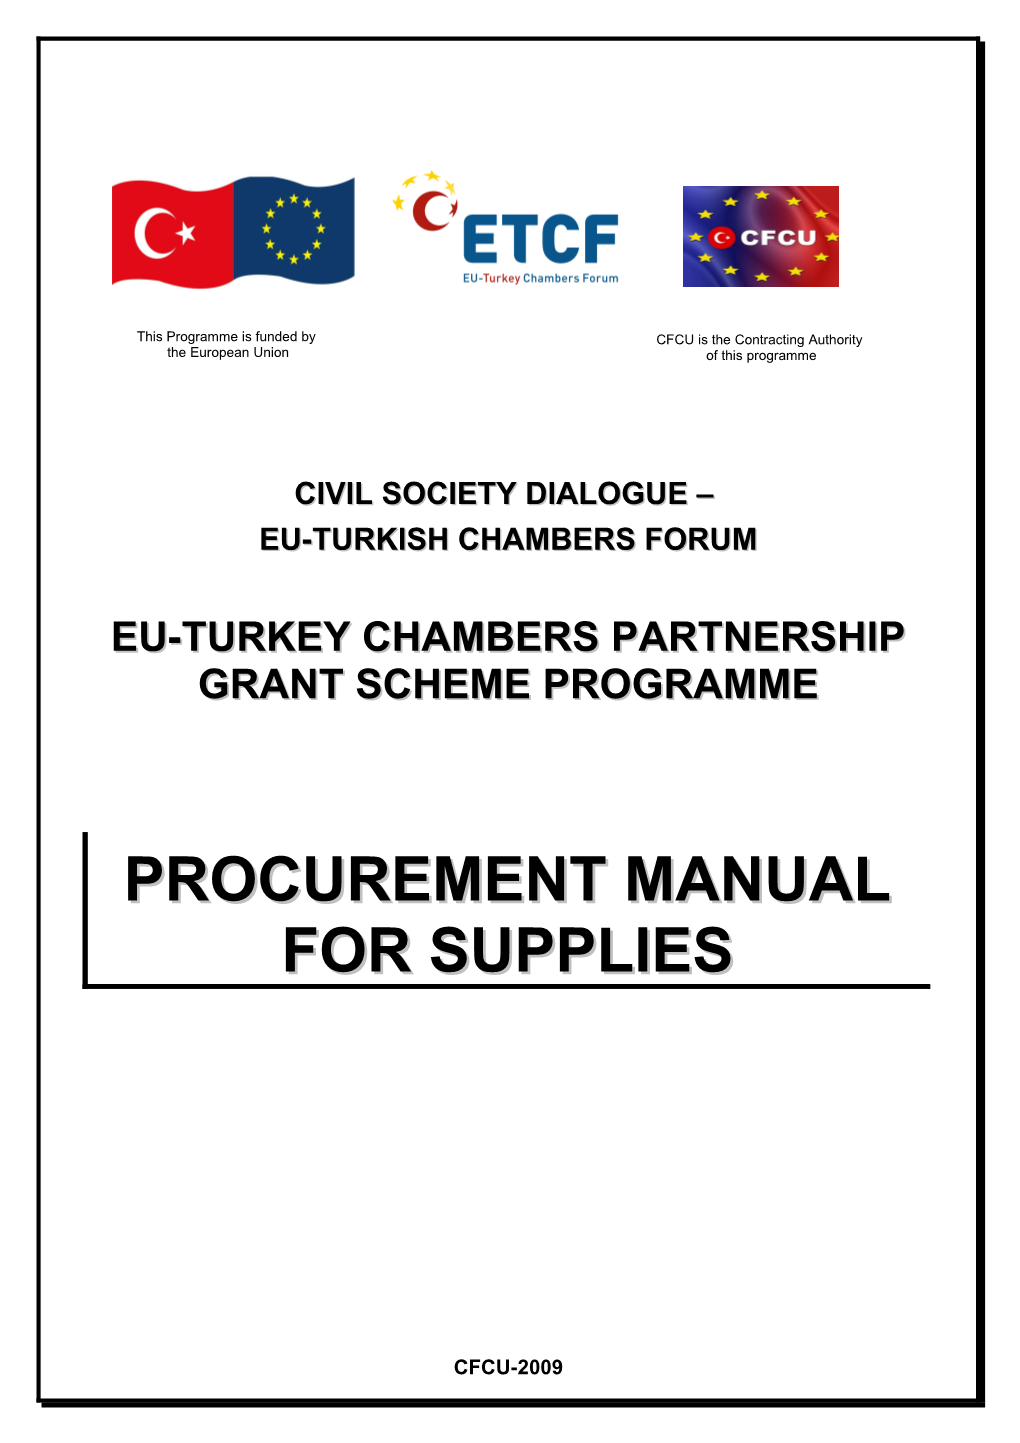 AKKM Procurement Manual for Supplies